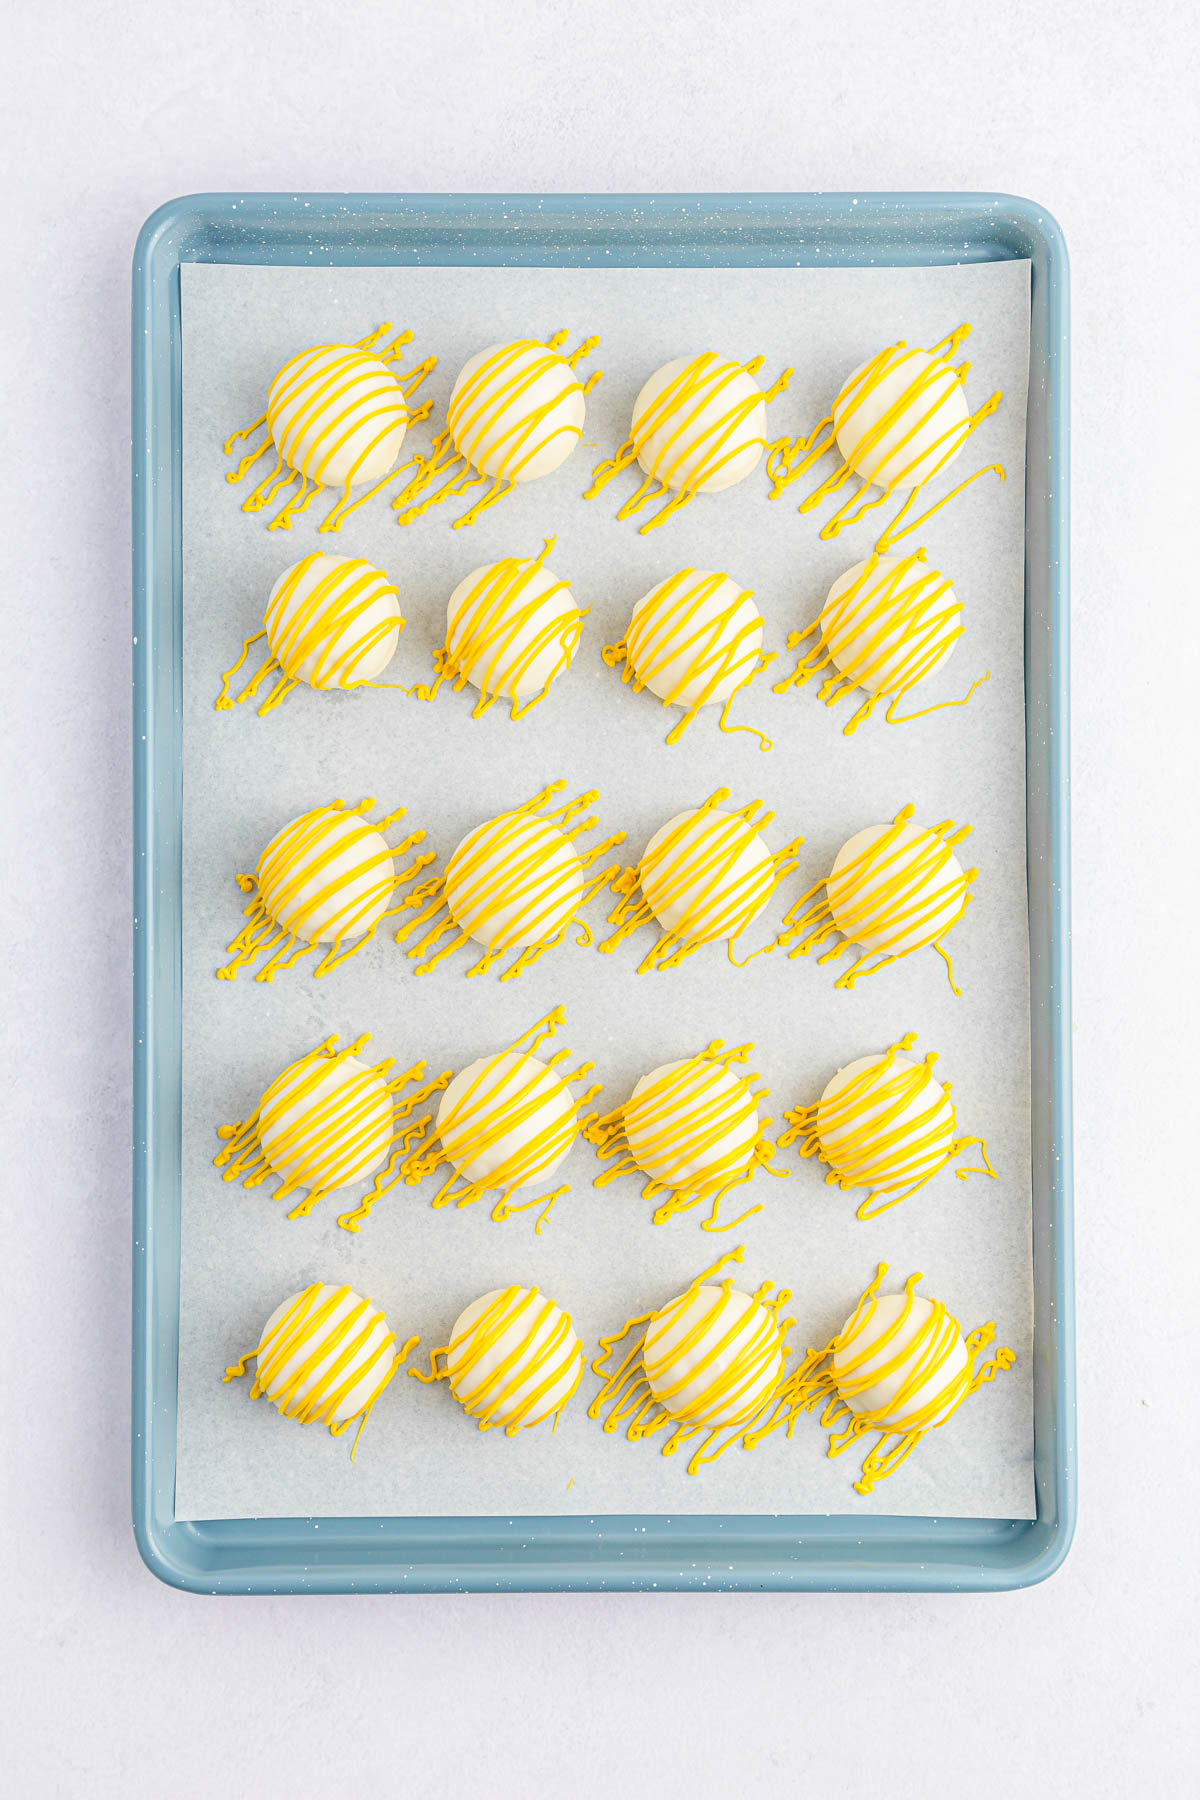 Lemon cake balls with yellow drizzle